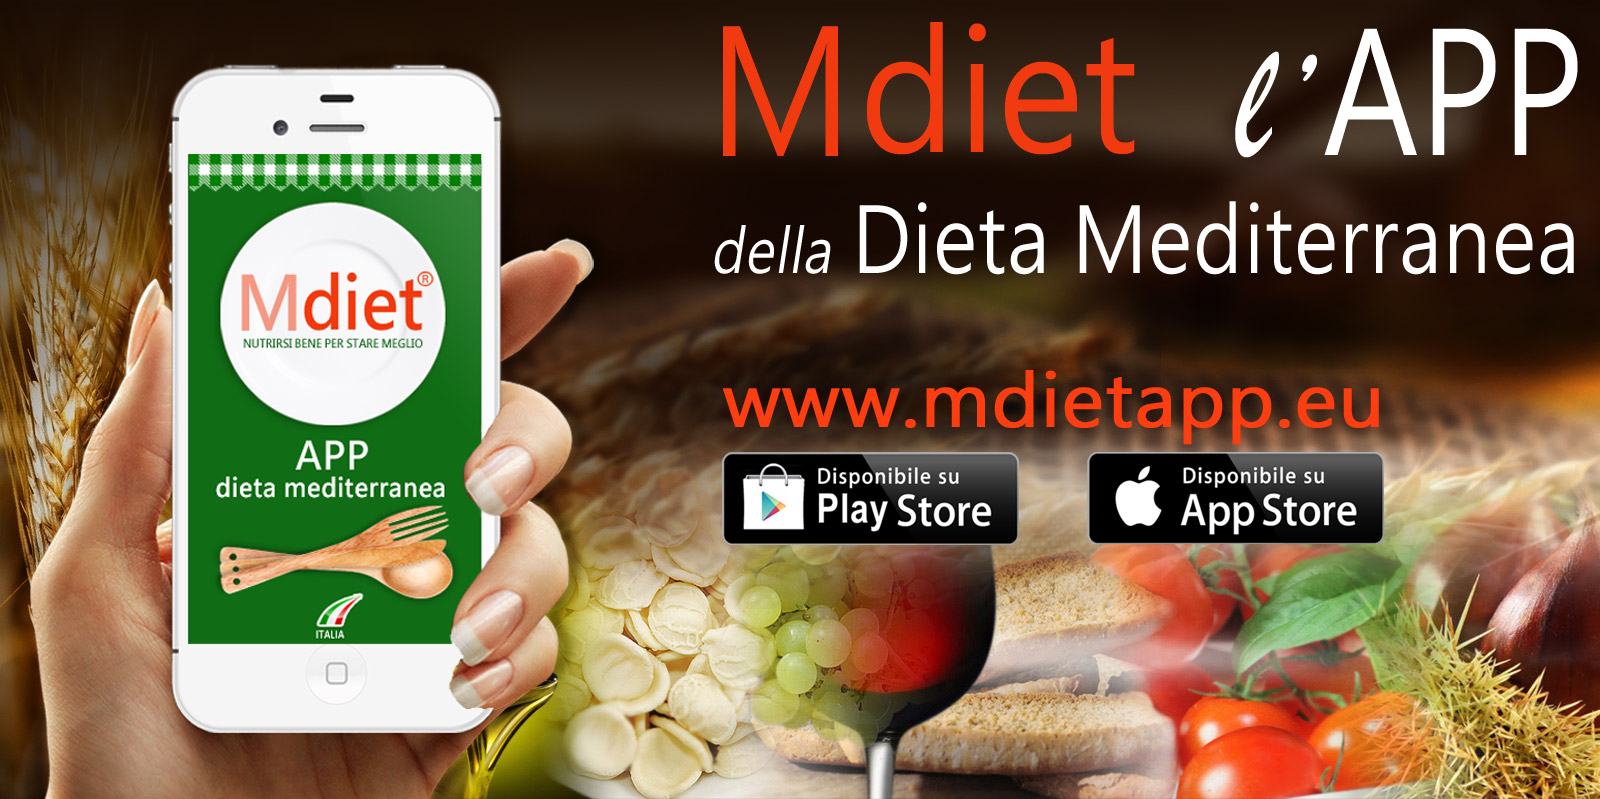 MDiet l'App della Dieta Mediterranea